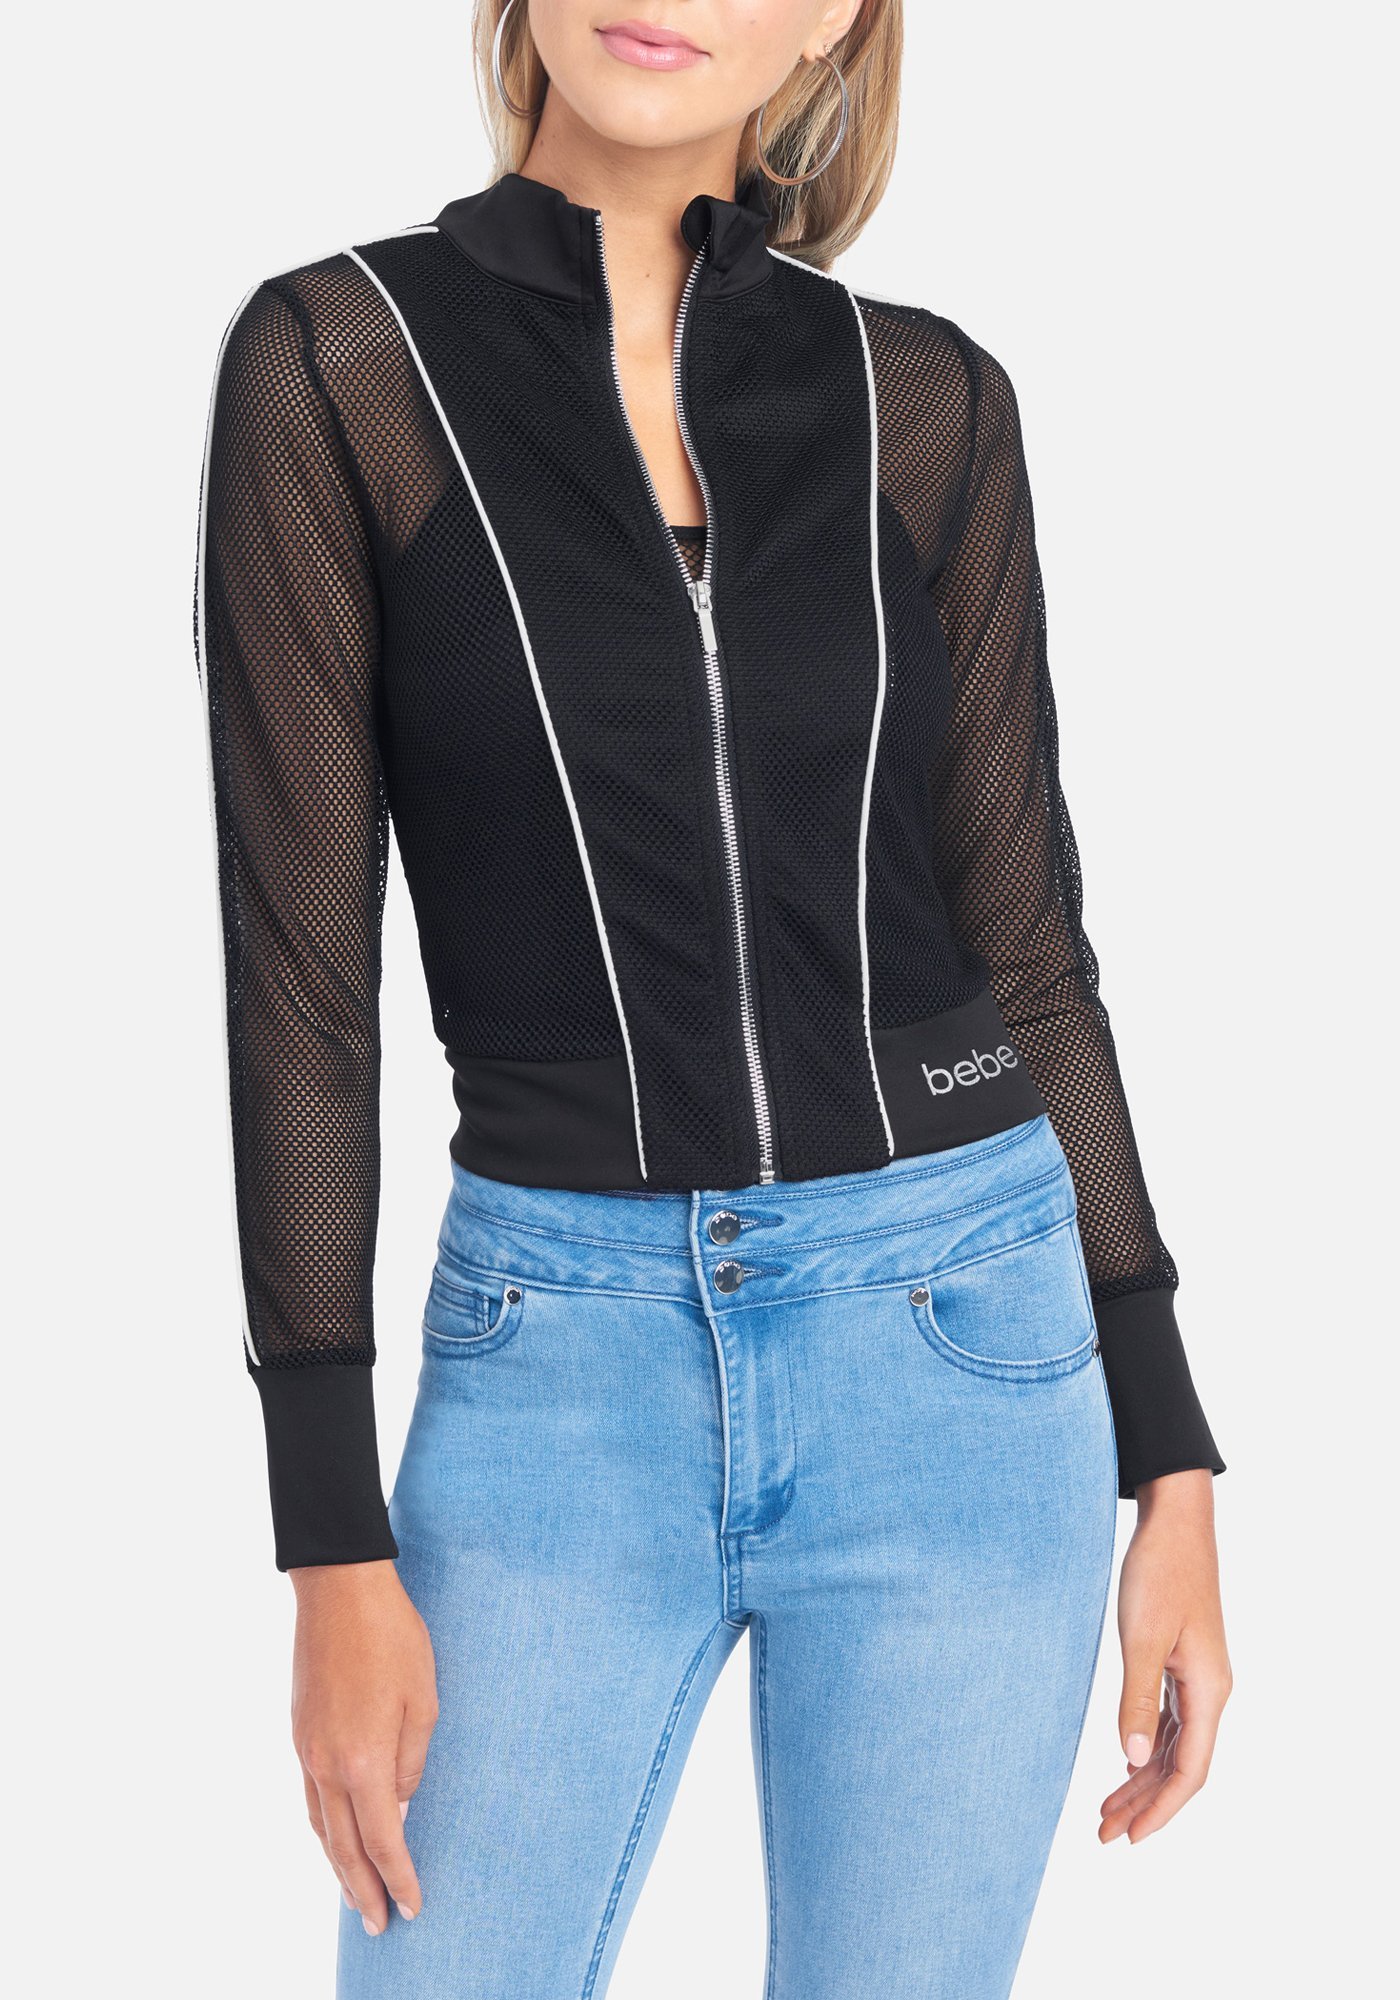 Women's Bebe logo mesh Jacket, Size XS in Black Polyester